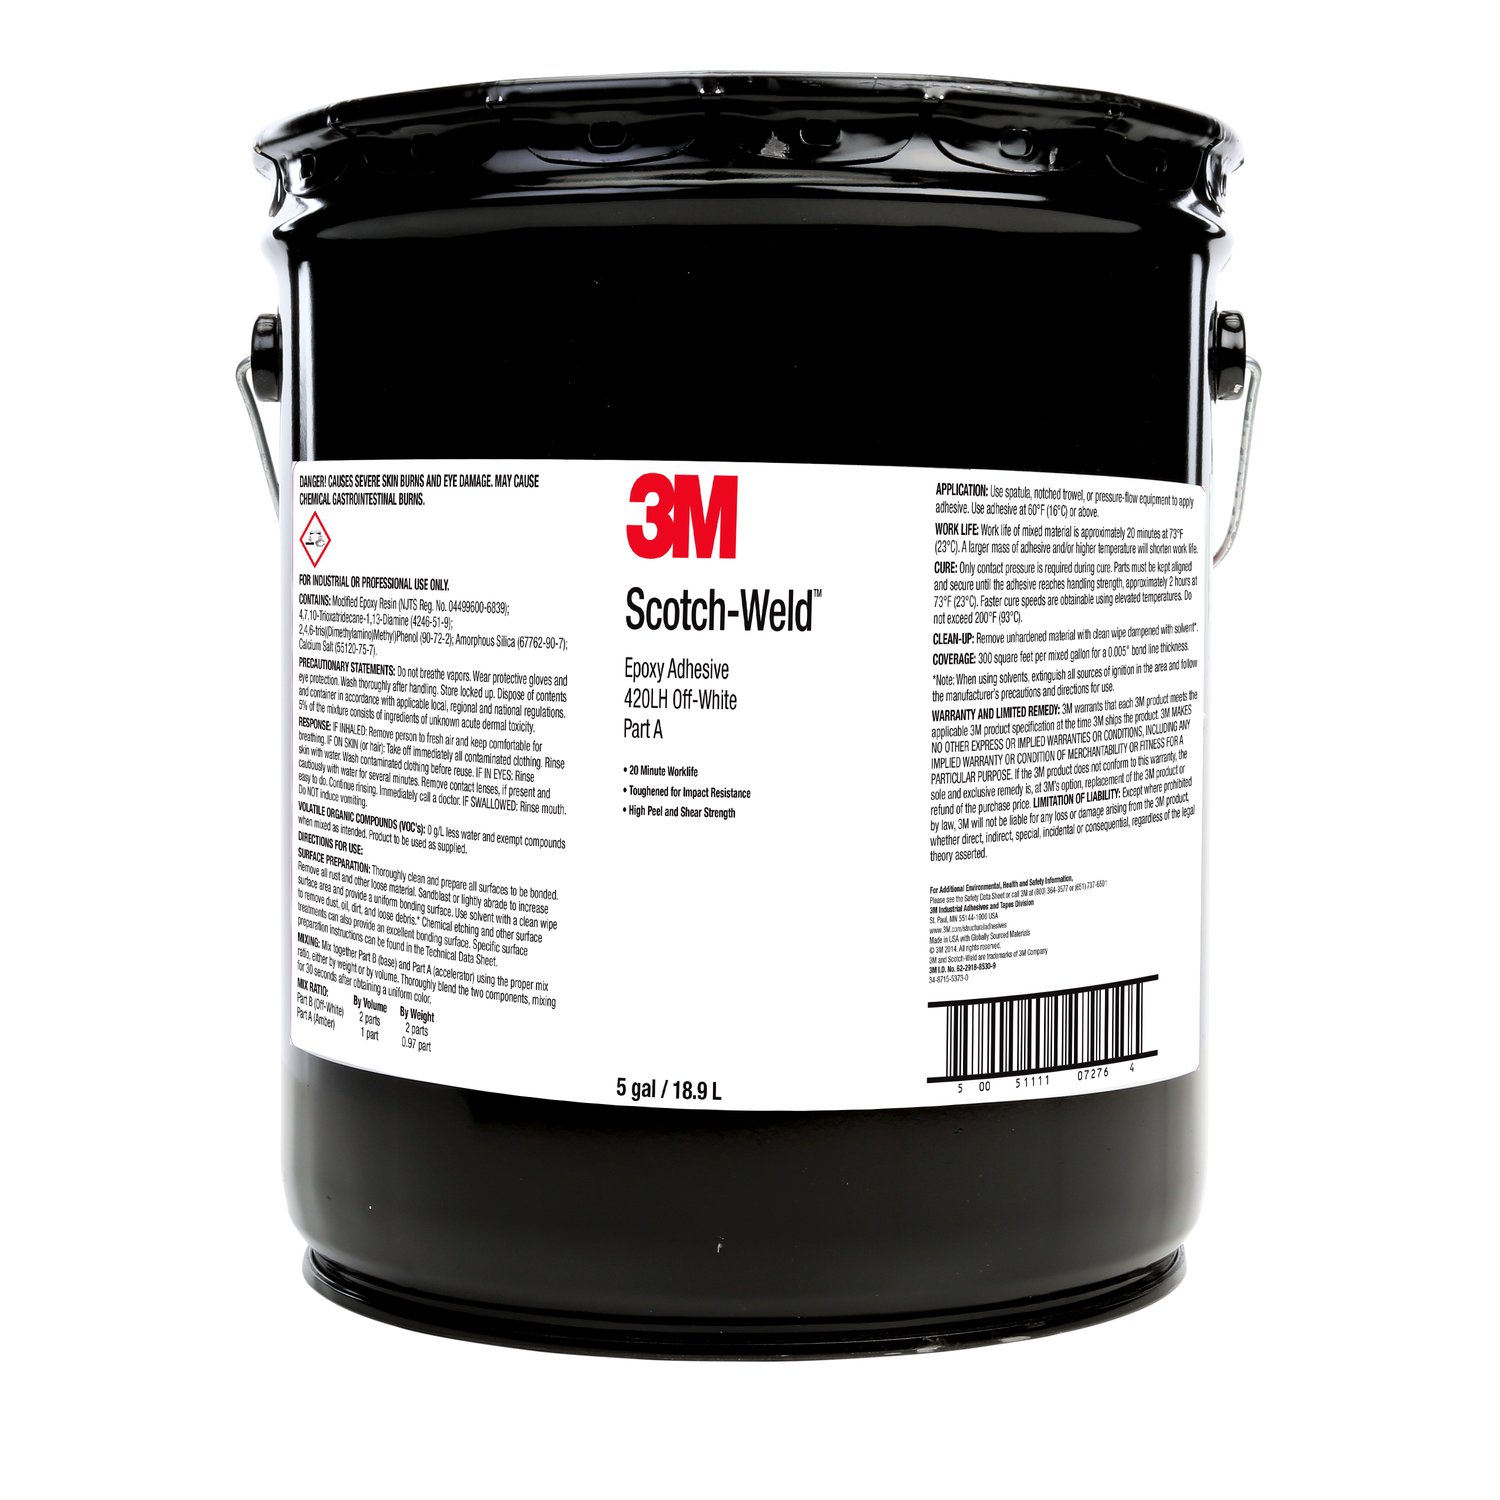 7010365971 - 3M Scotch-Weld Epoxy Adhesive 420LH, Off-White, Part A, 5 Gallon Drum
(Pail)